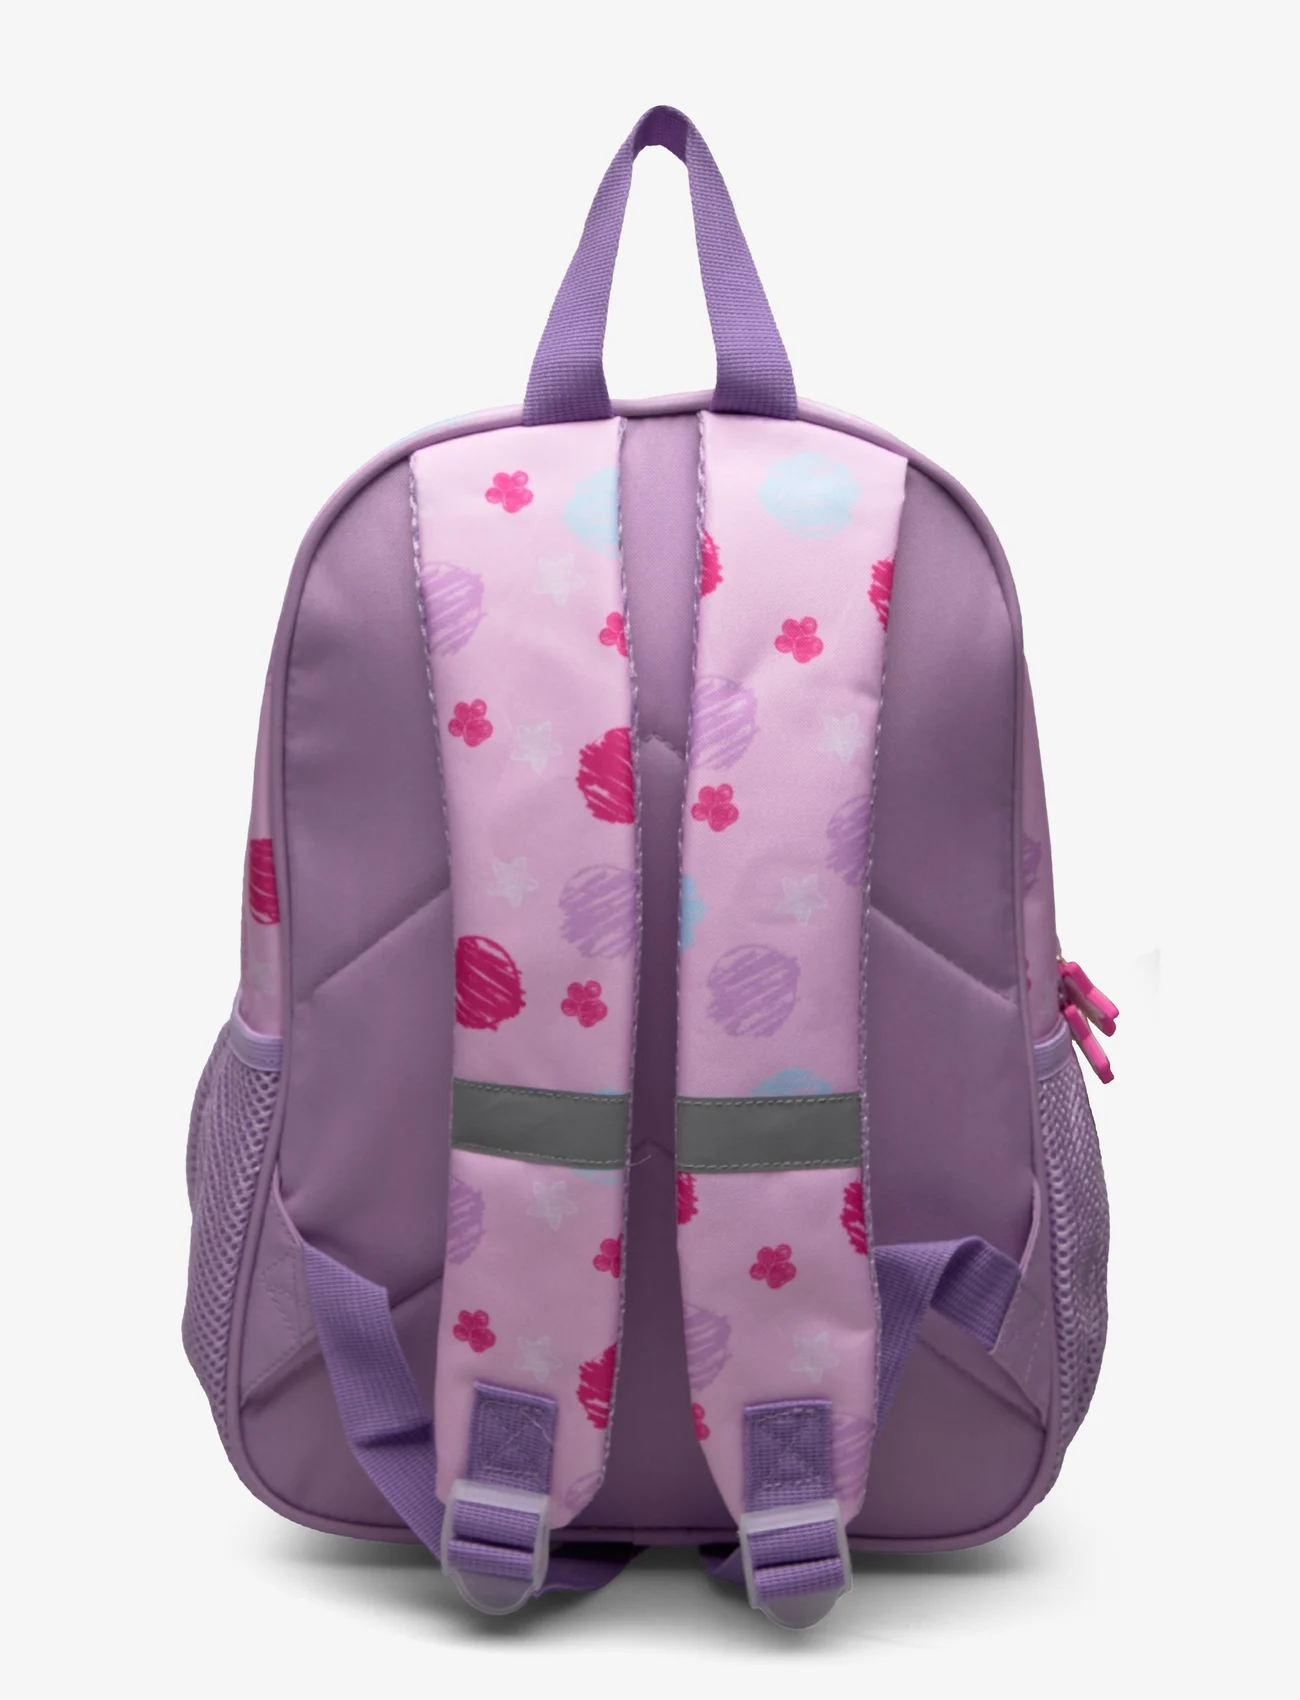 Euromic - PAW PATROL GIRLS, medium backpack - sommarfynd - pink - 1